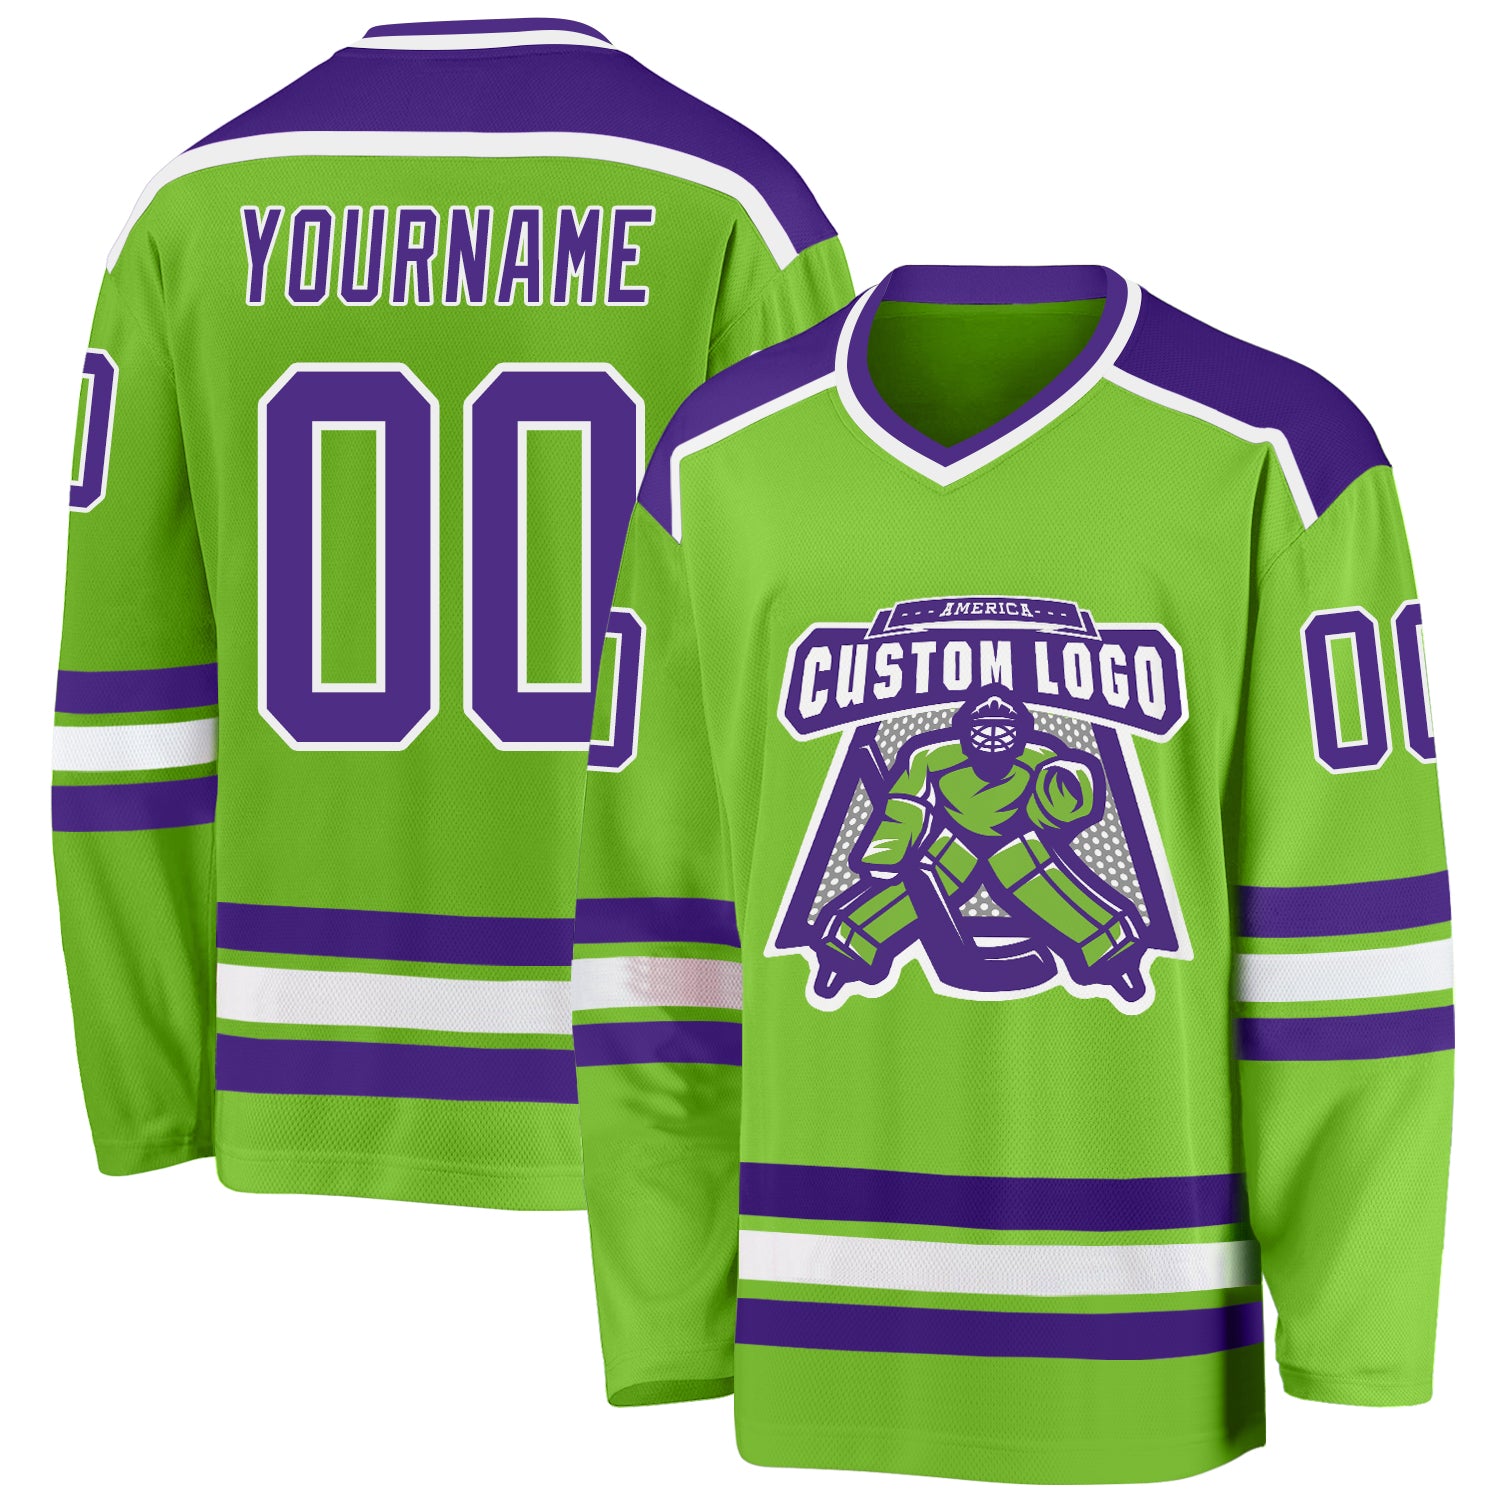 Custom Neon Green Hockey Jerseys, Hockey Uniforms For Your Team